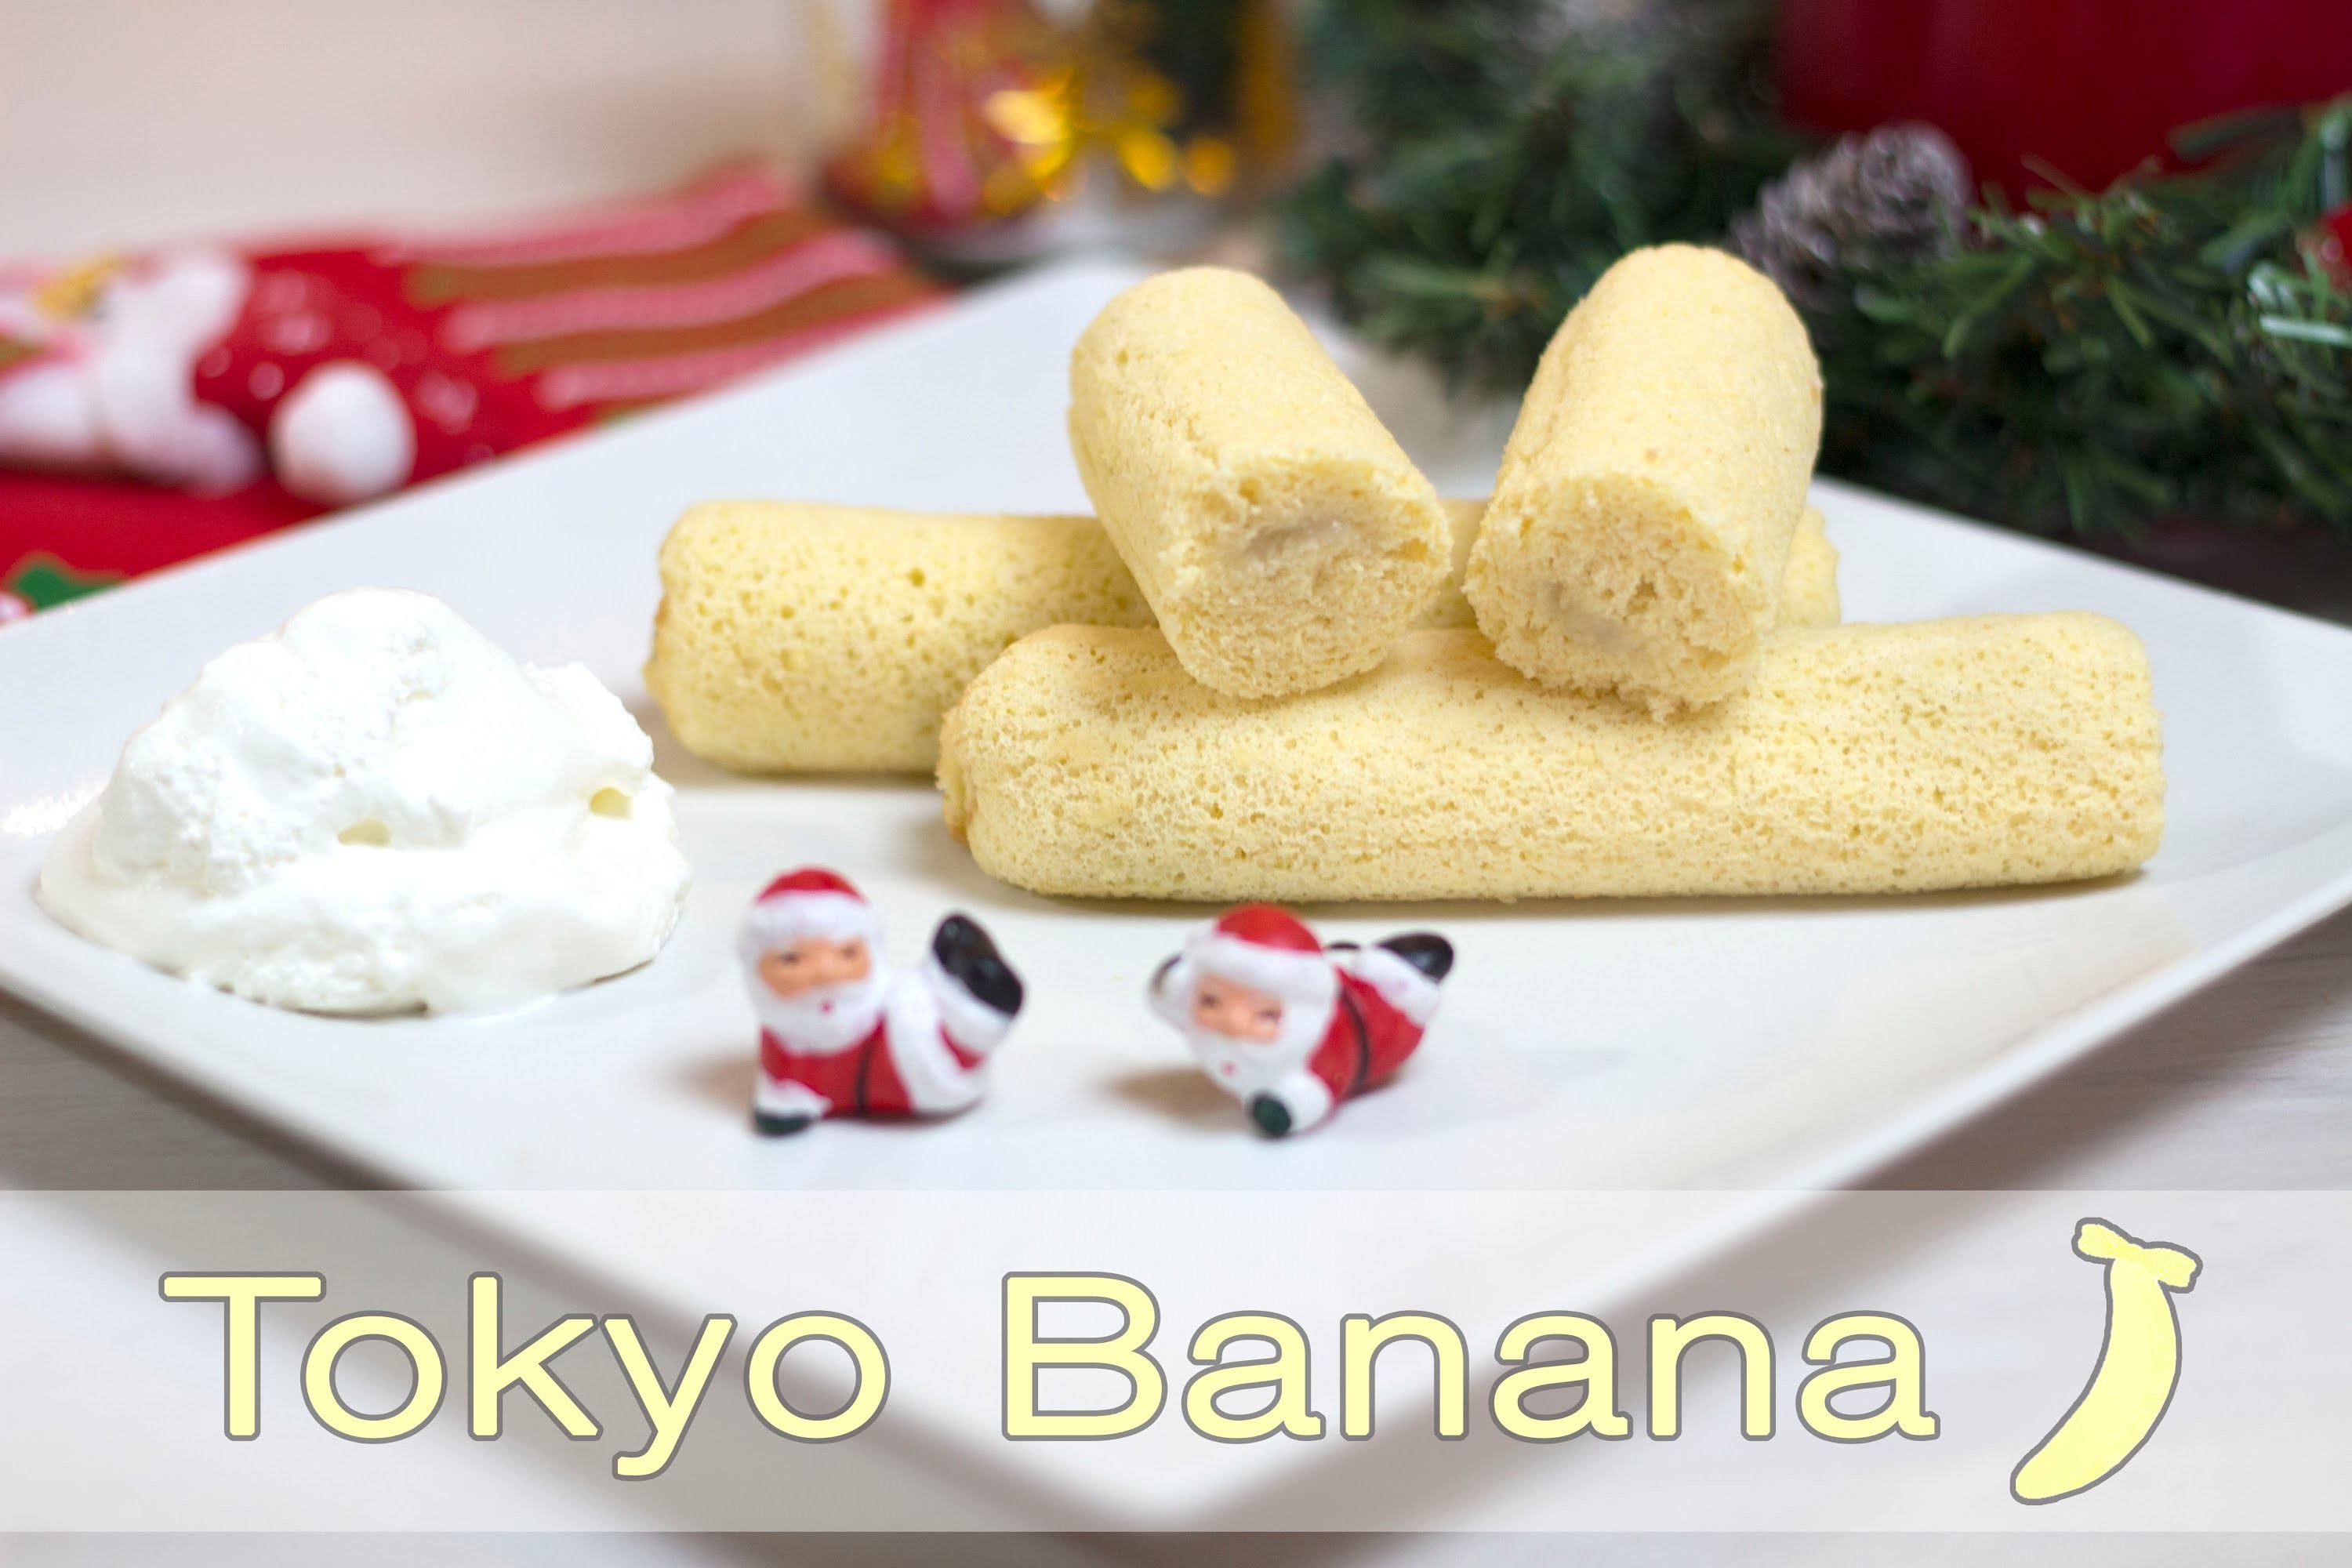 Receta de Tokyo Banana - RecetasJaponesas.com